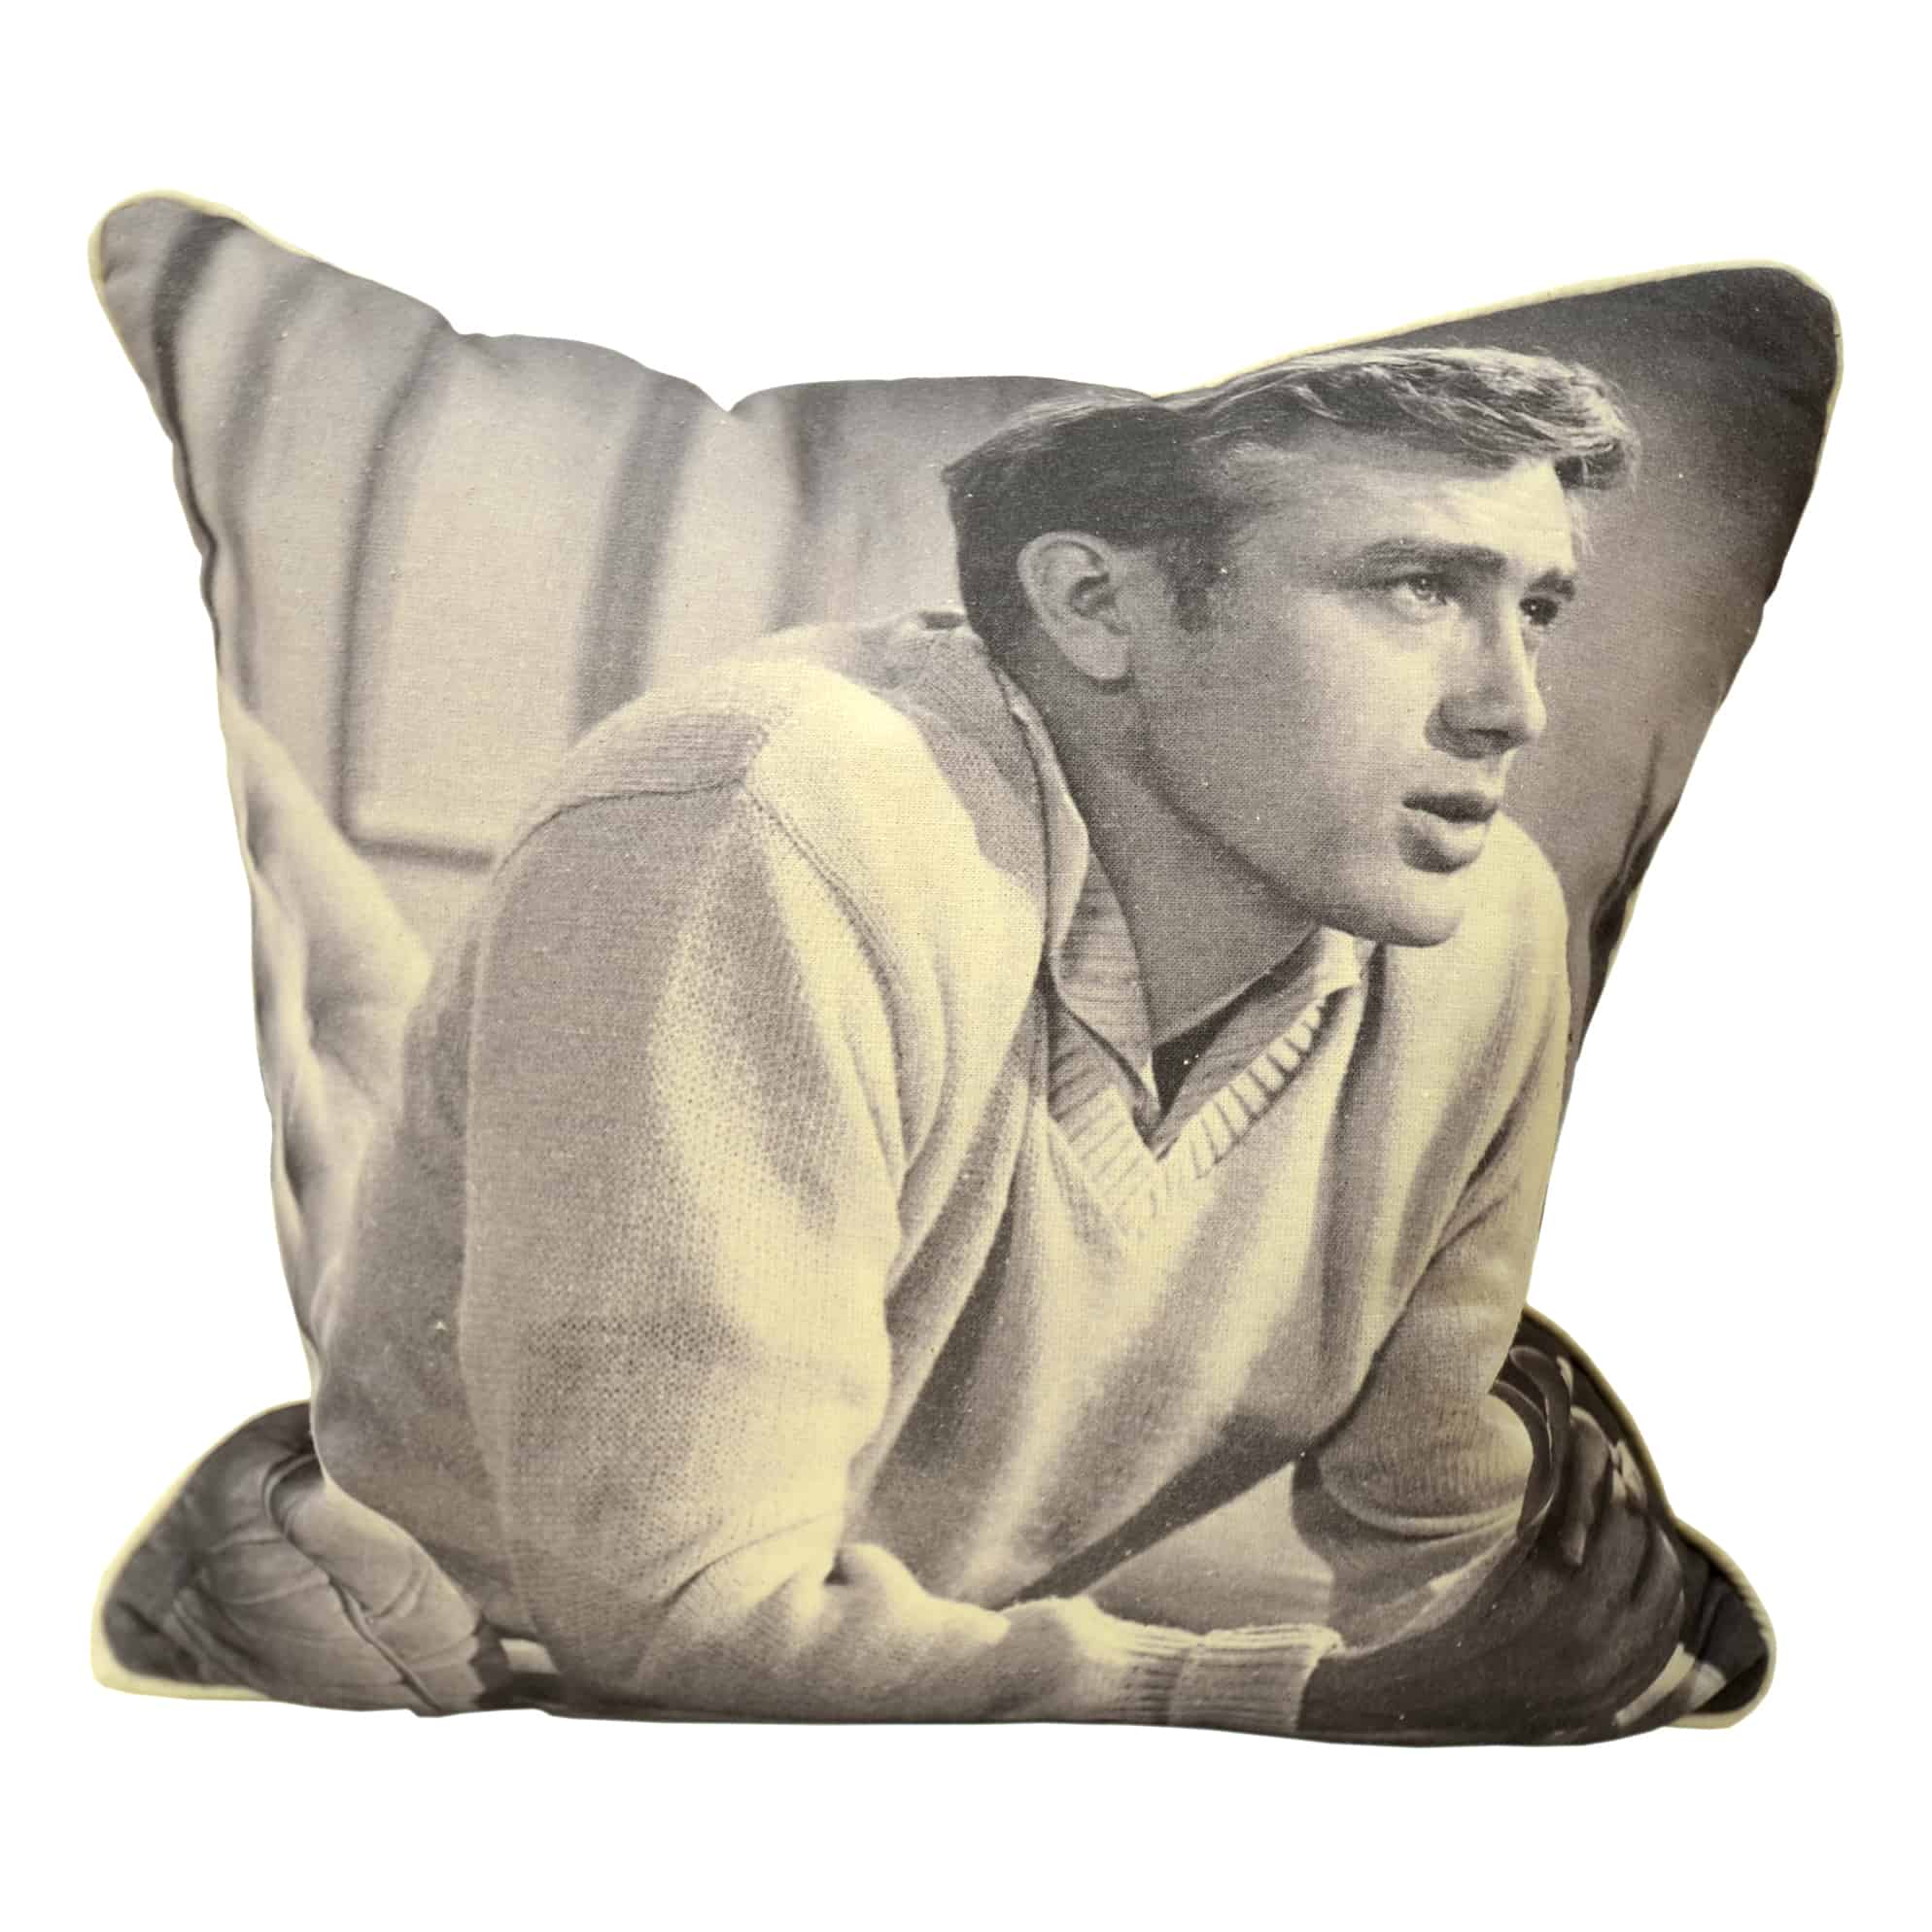 James Dean cushion black and white bespoke print